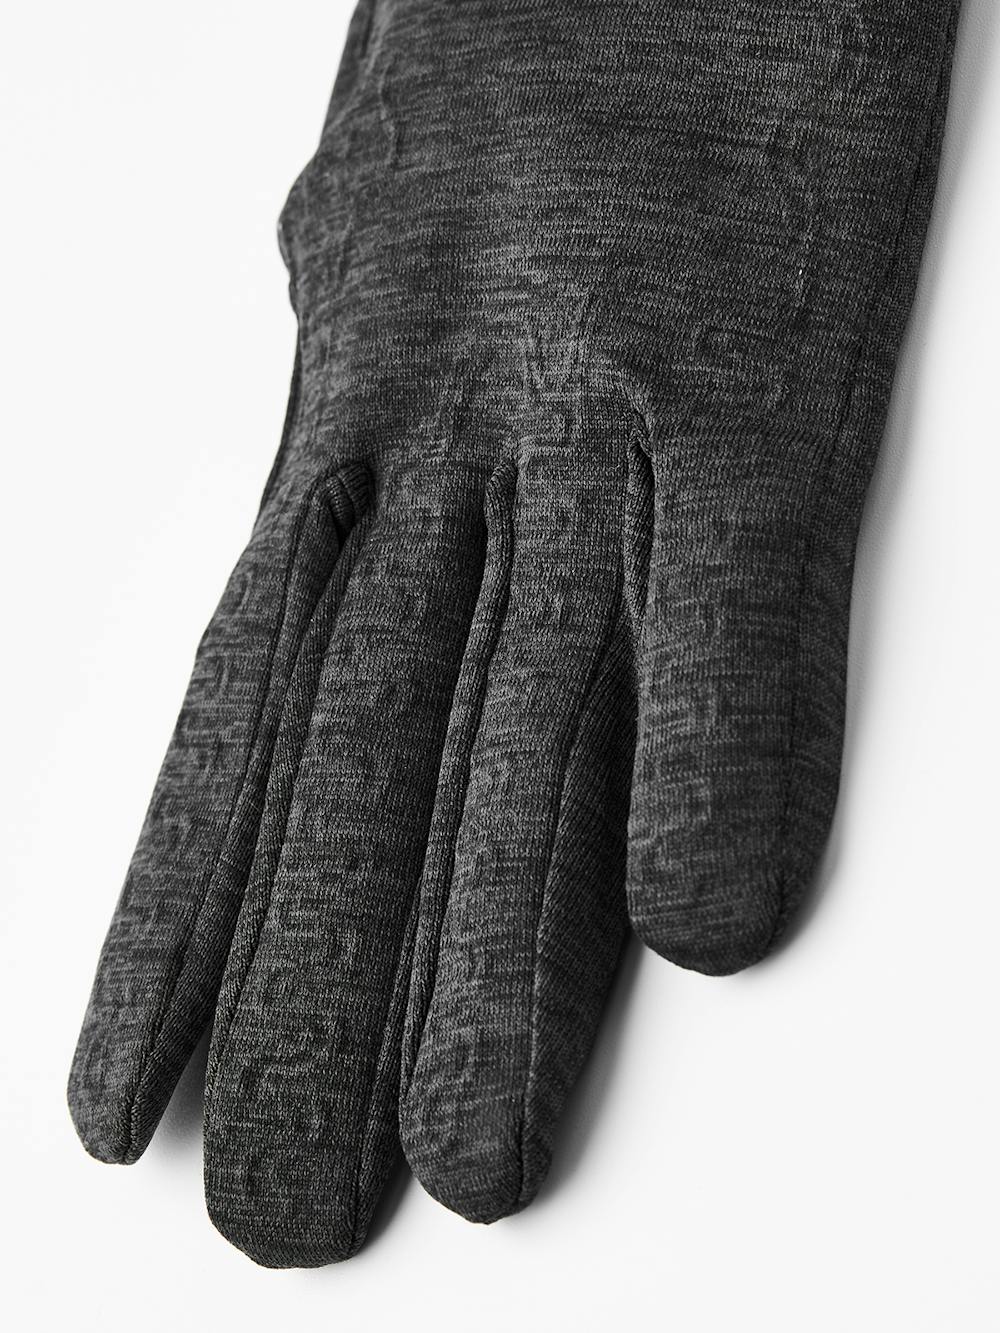 Hestra Men's Tactility Heat Liner Glove